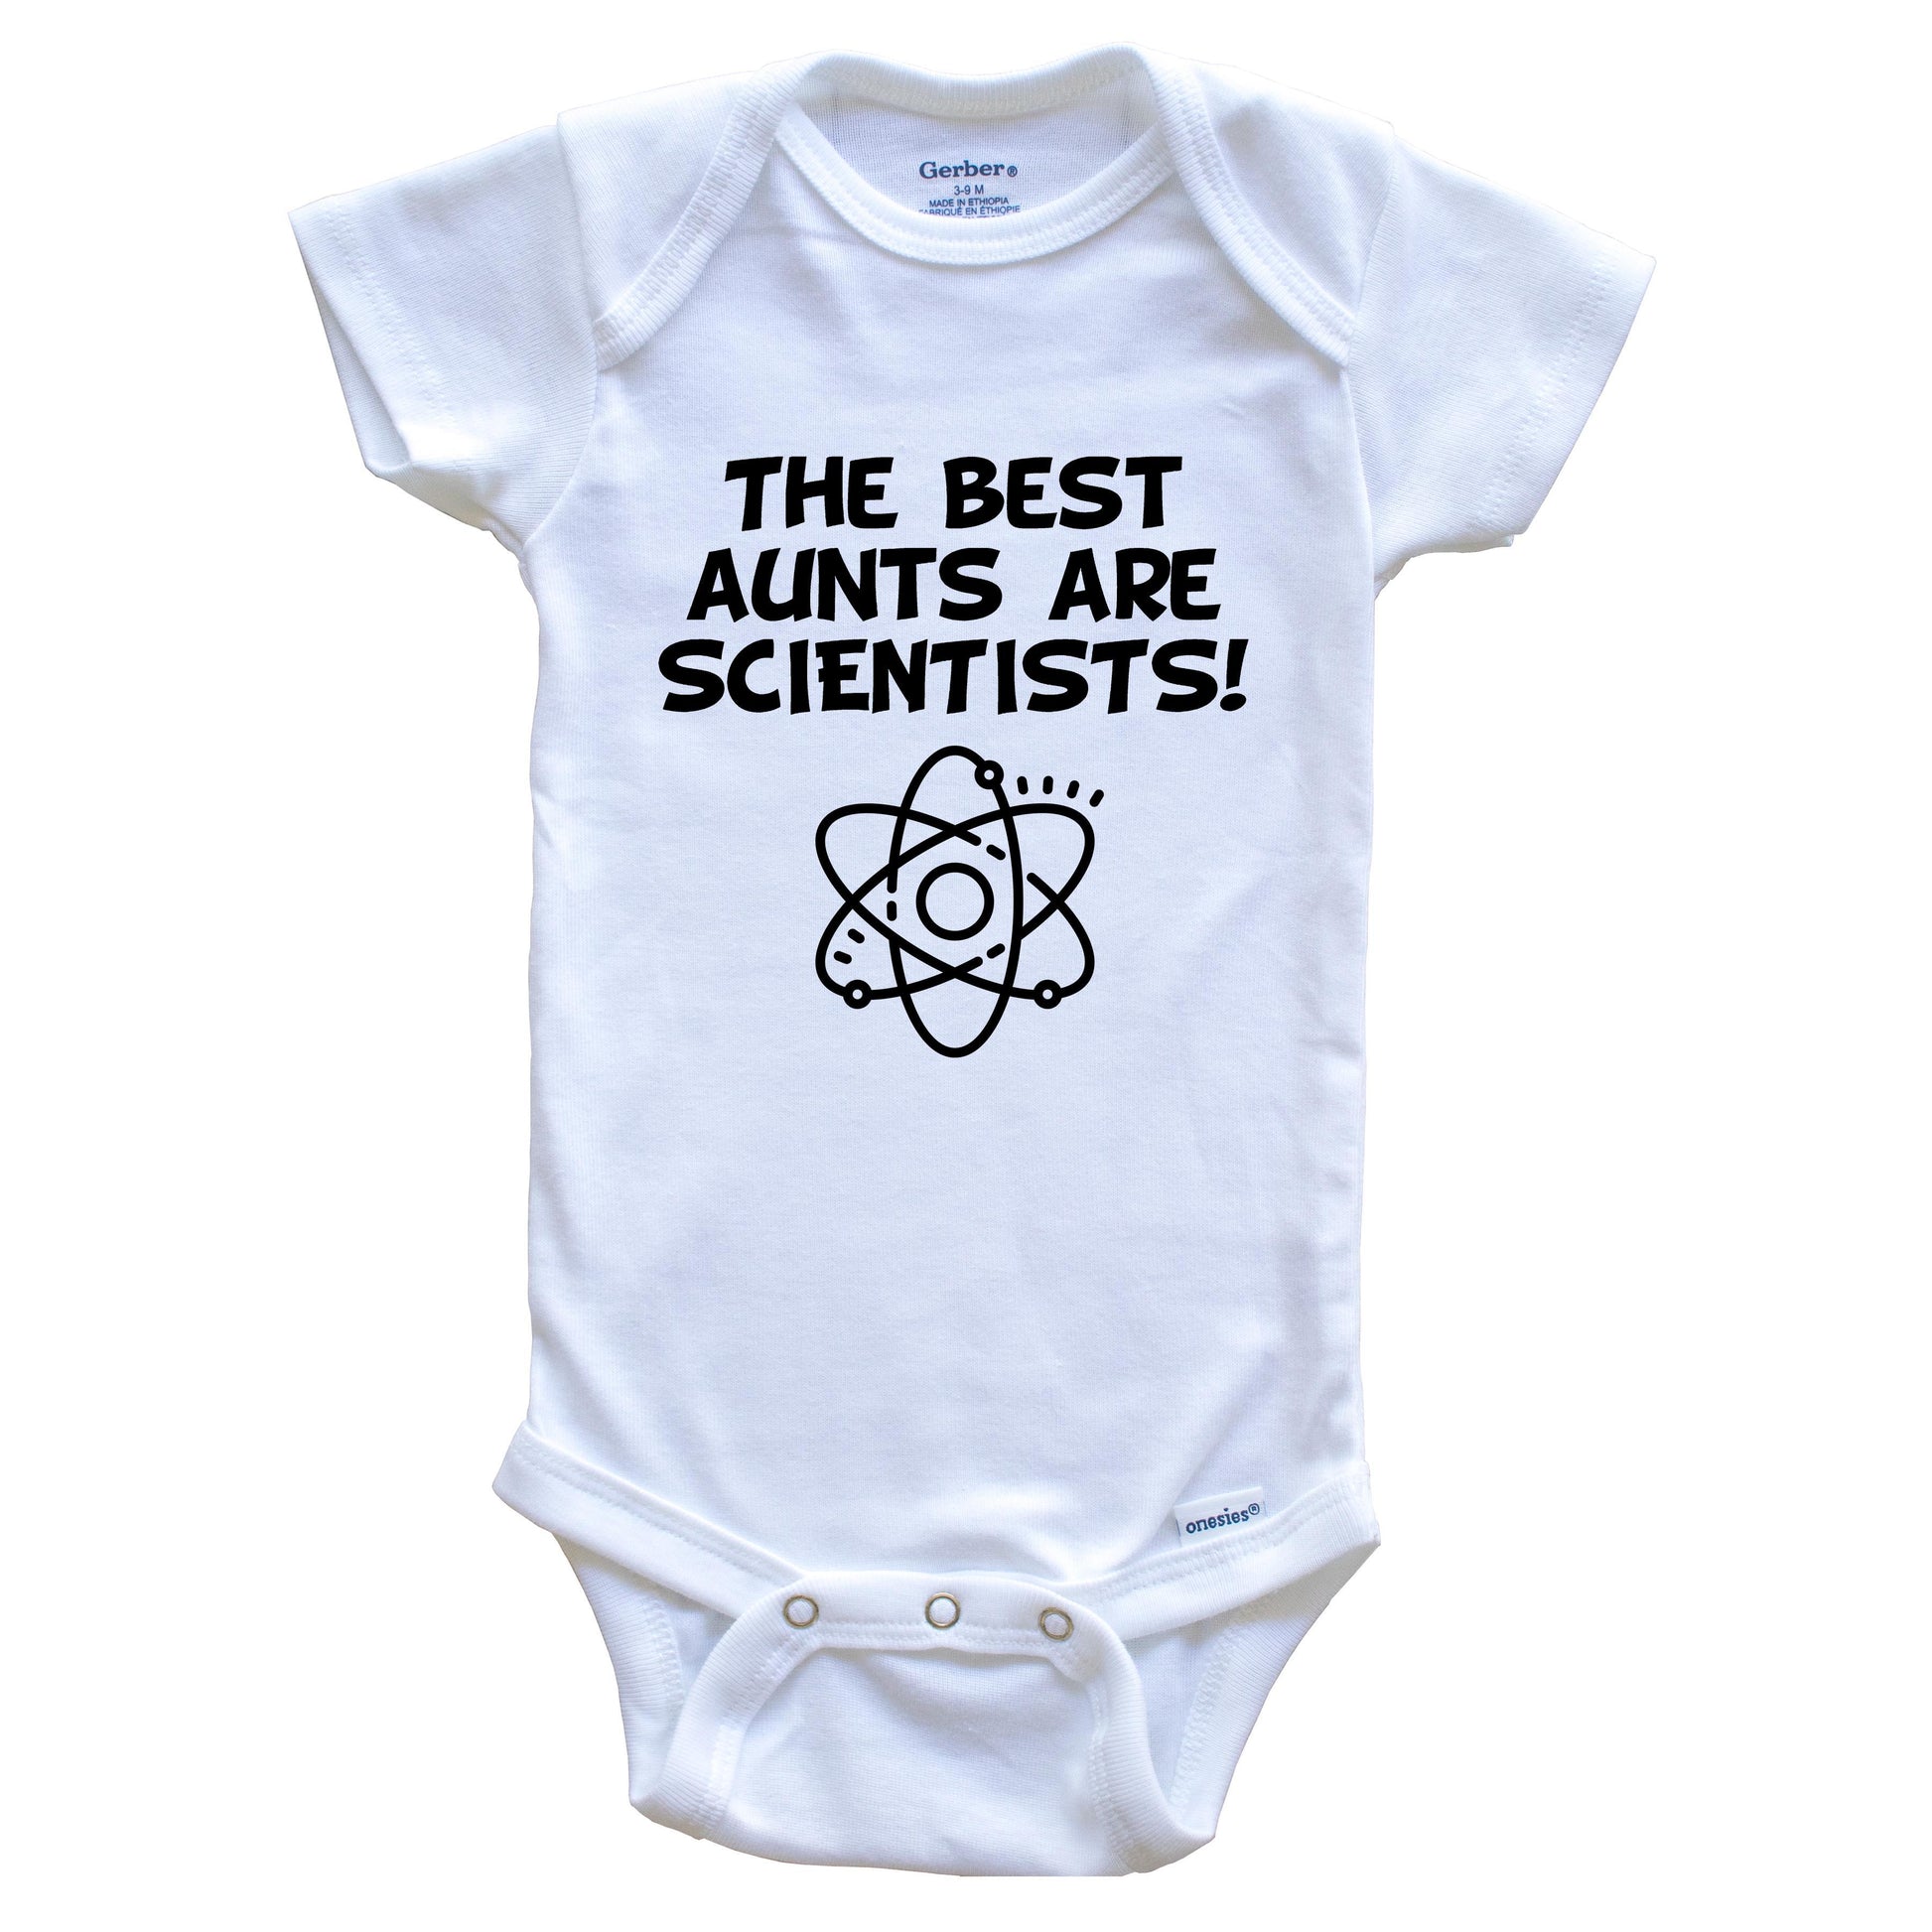 The Best Aunts Are Scientists Funny Niece Nephew Baby Onesie